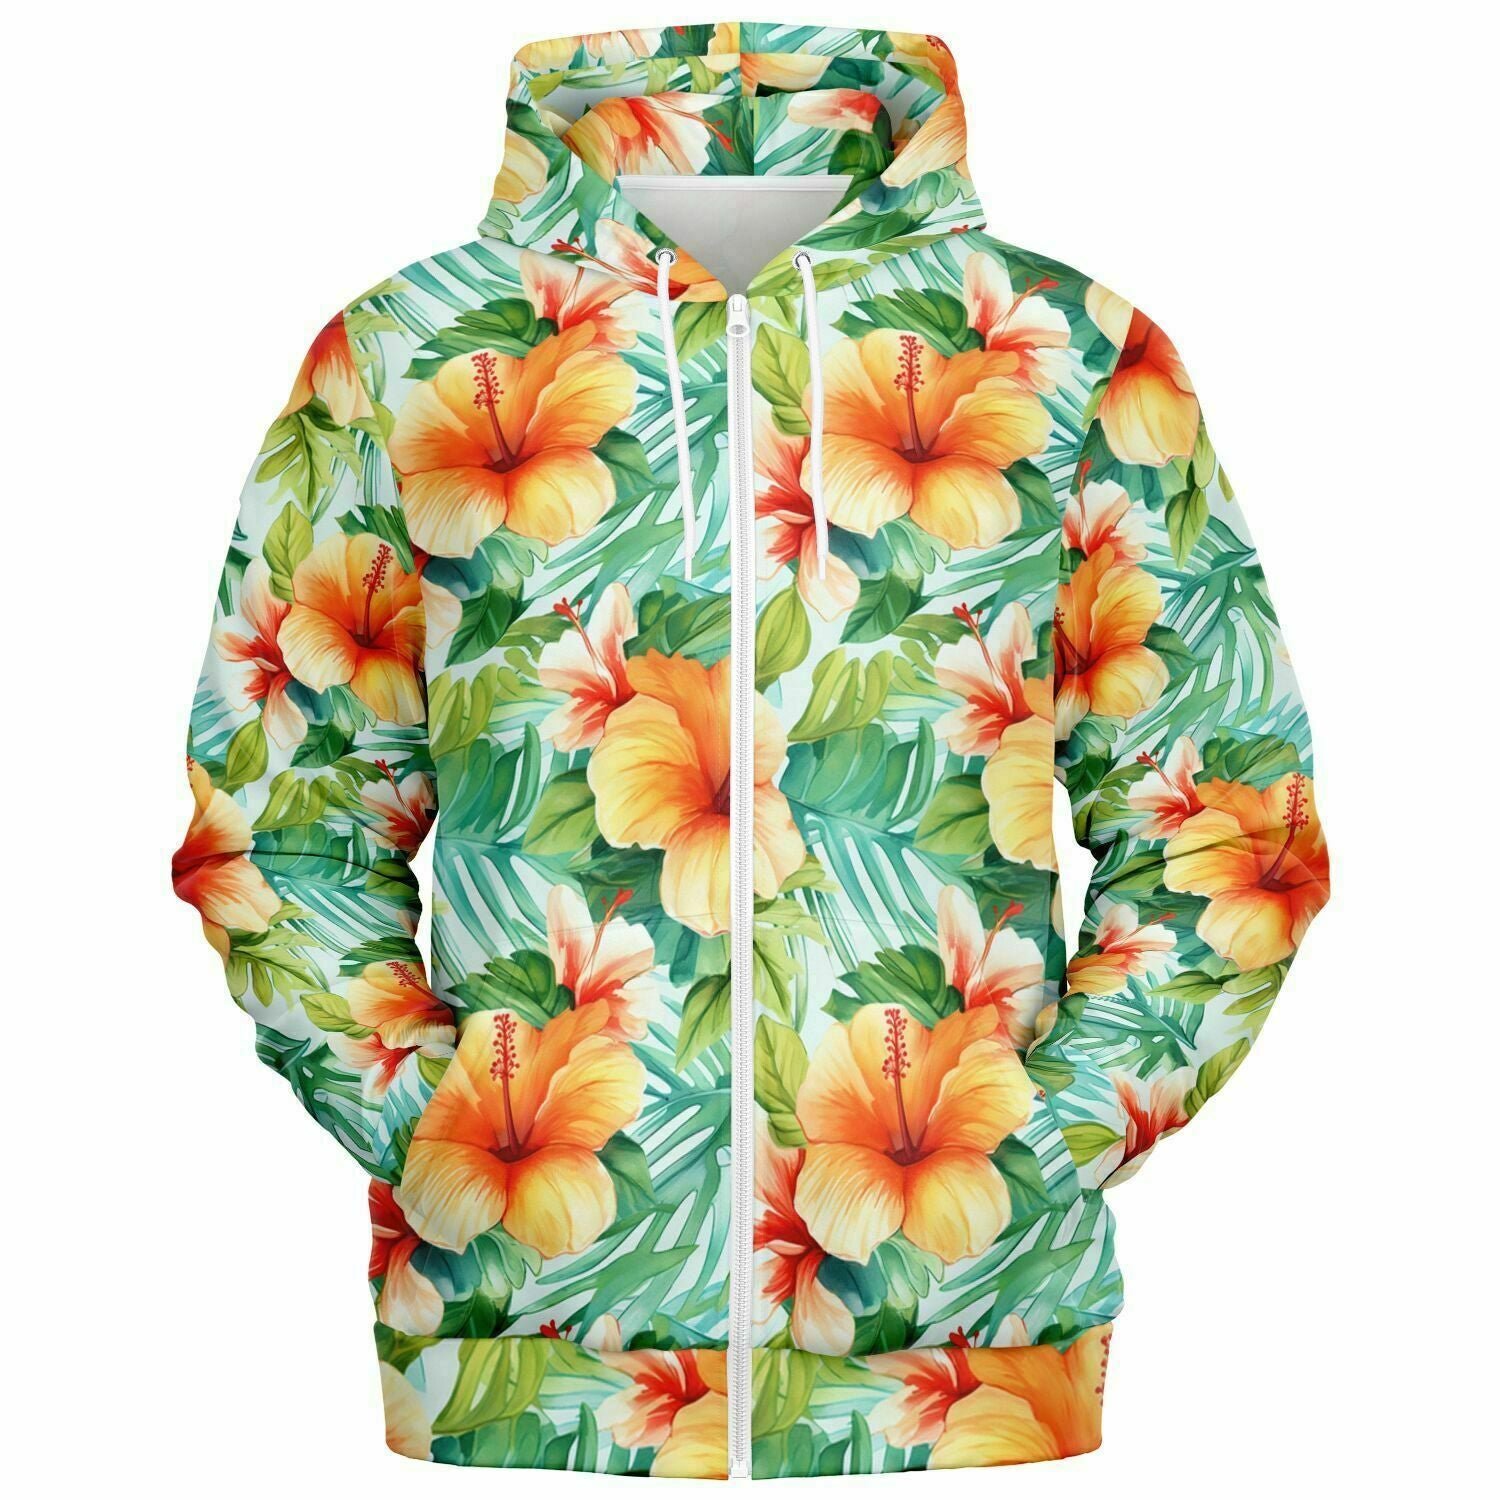 Flowers Zip Up Hoodie, Tropical Floral Green Front Zipper Pocket Men Women Unisex Adult Aesthetic Graphic Cotton Fleece Hooded Sweatshirt Starcove Fashion